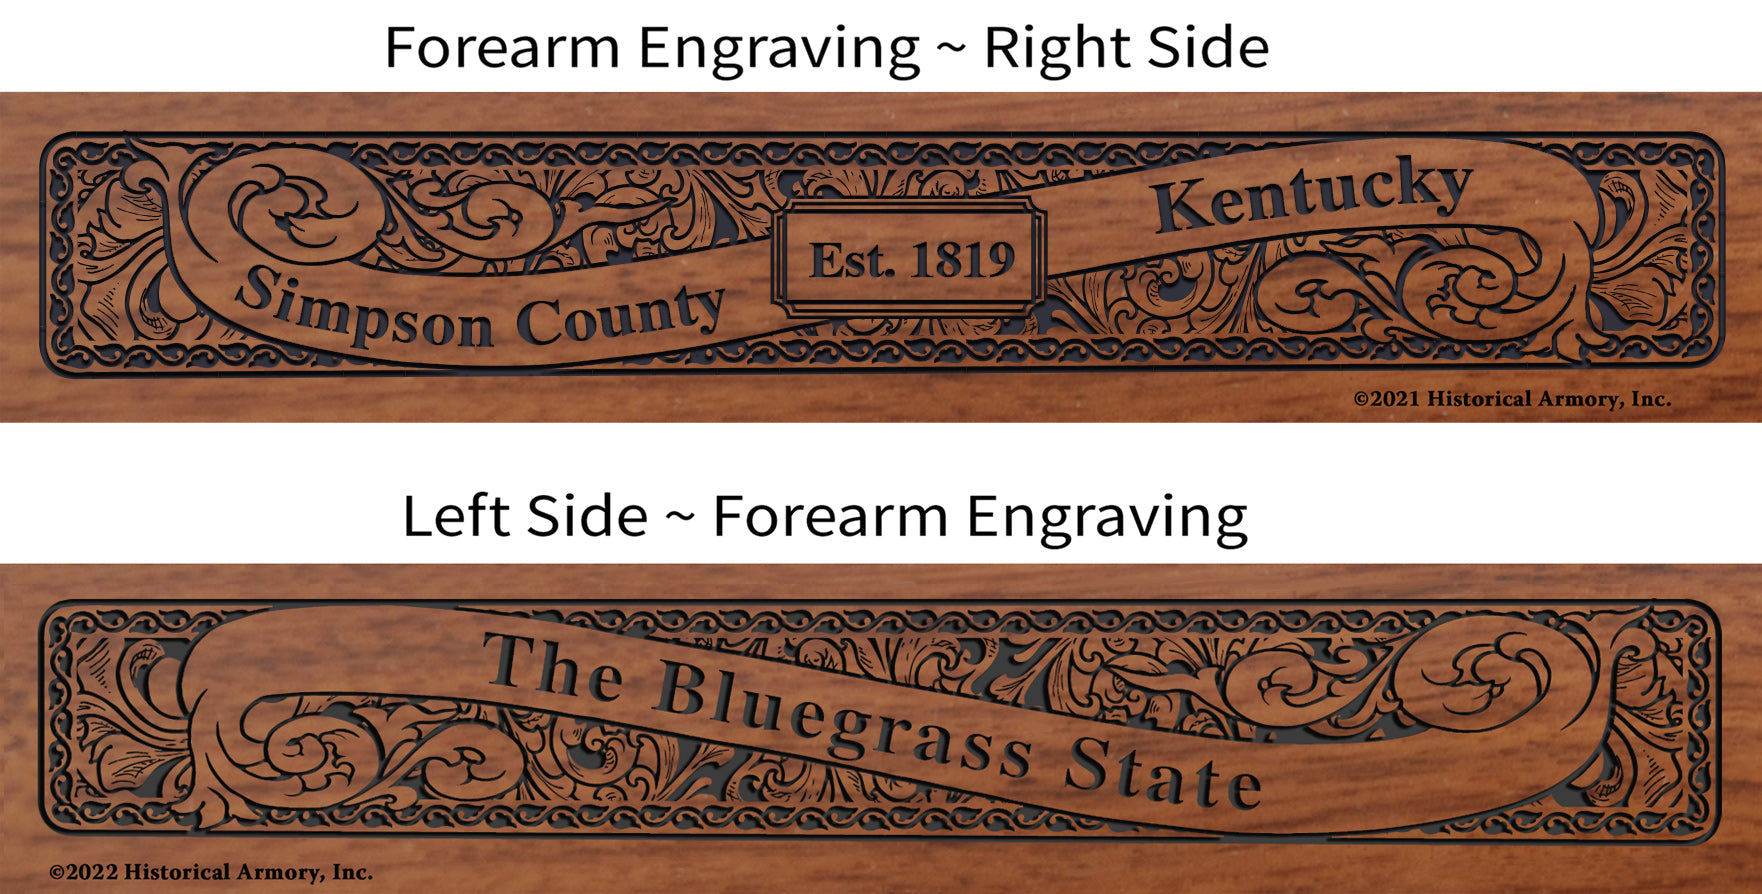 Simpson County Kentucky Engraved Rifle Forearm